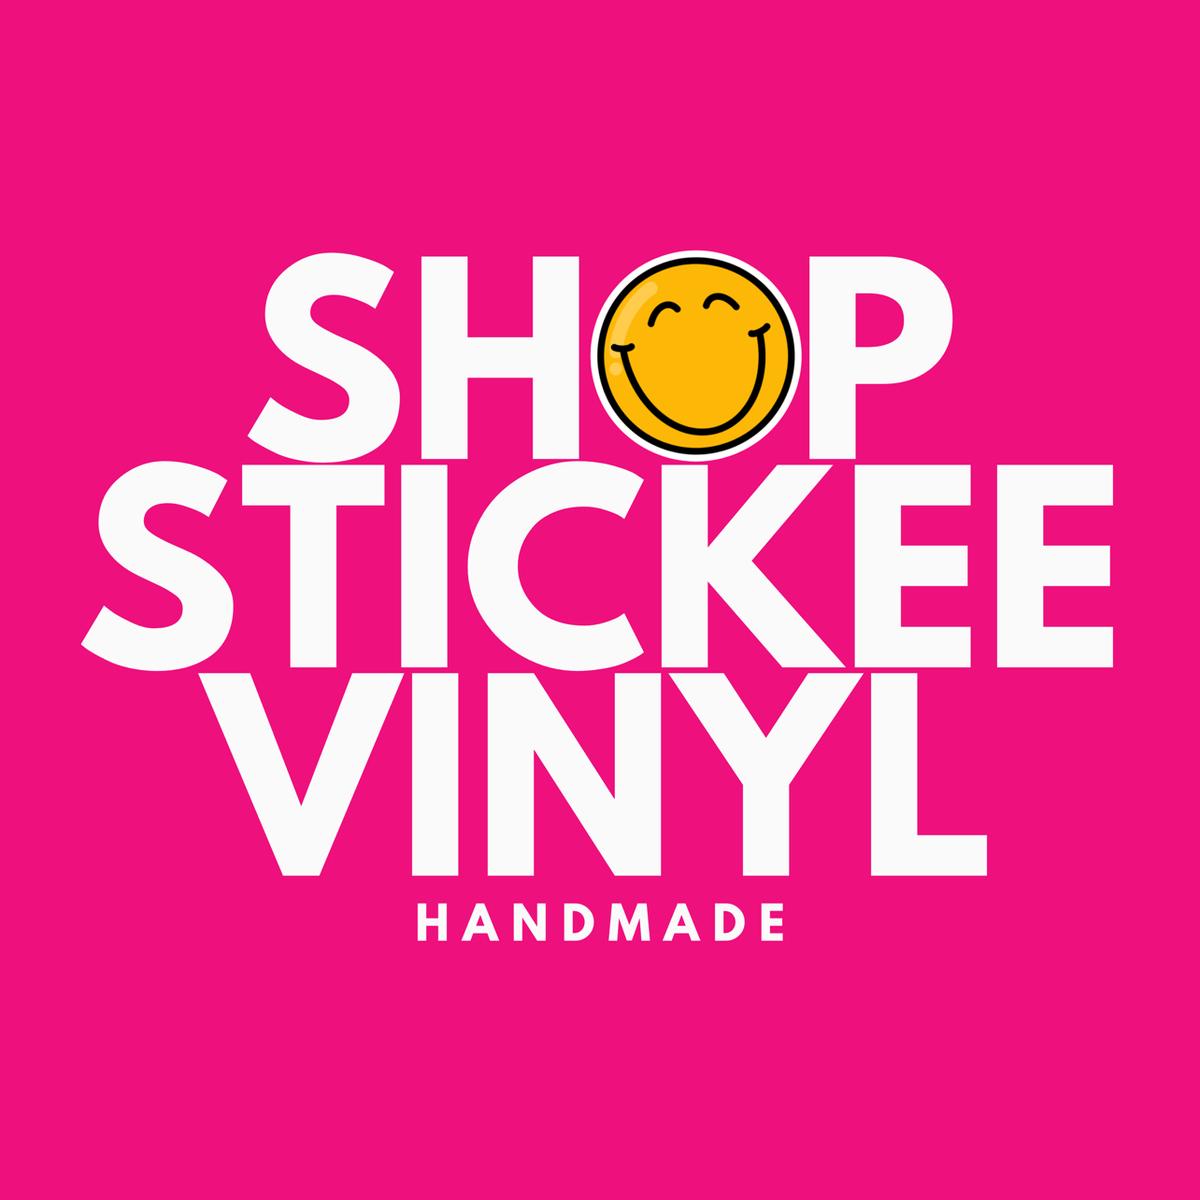 Stickee Vinyl's images